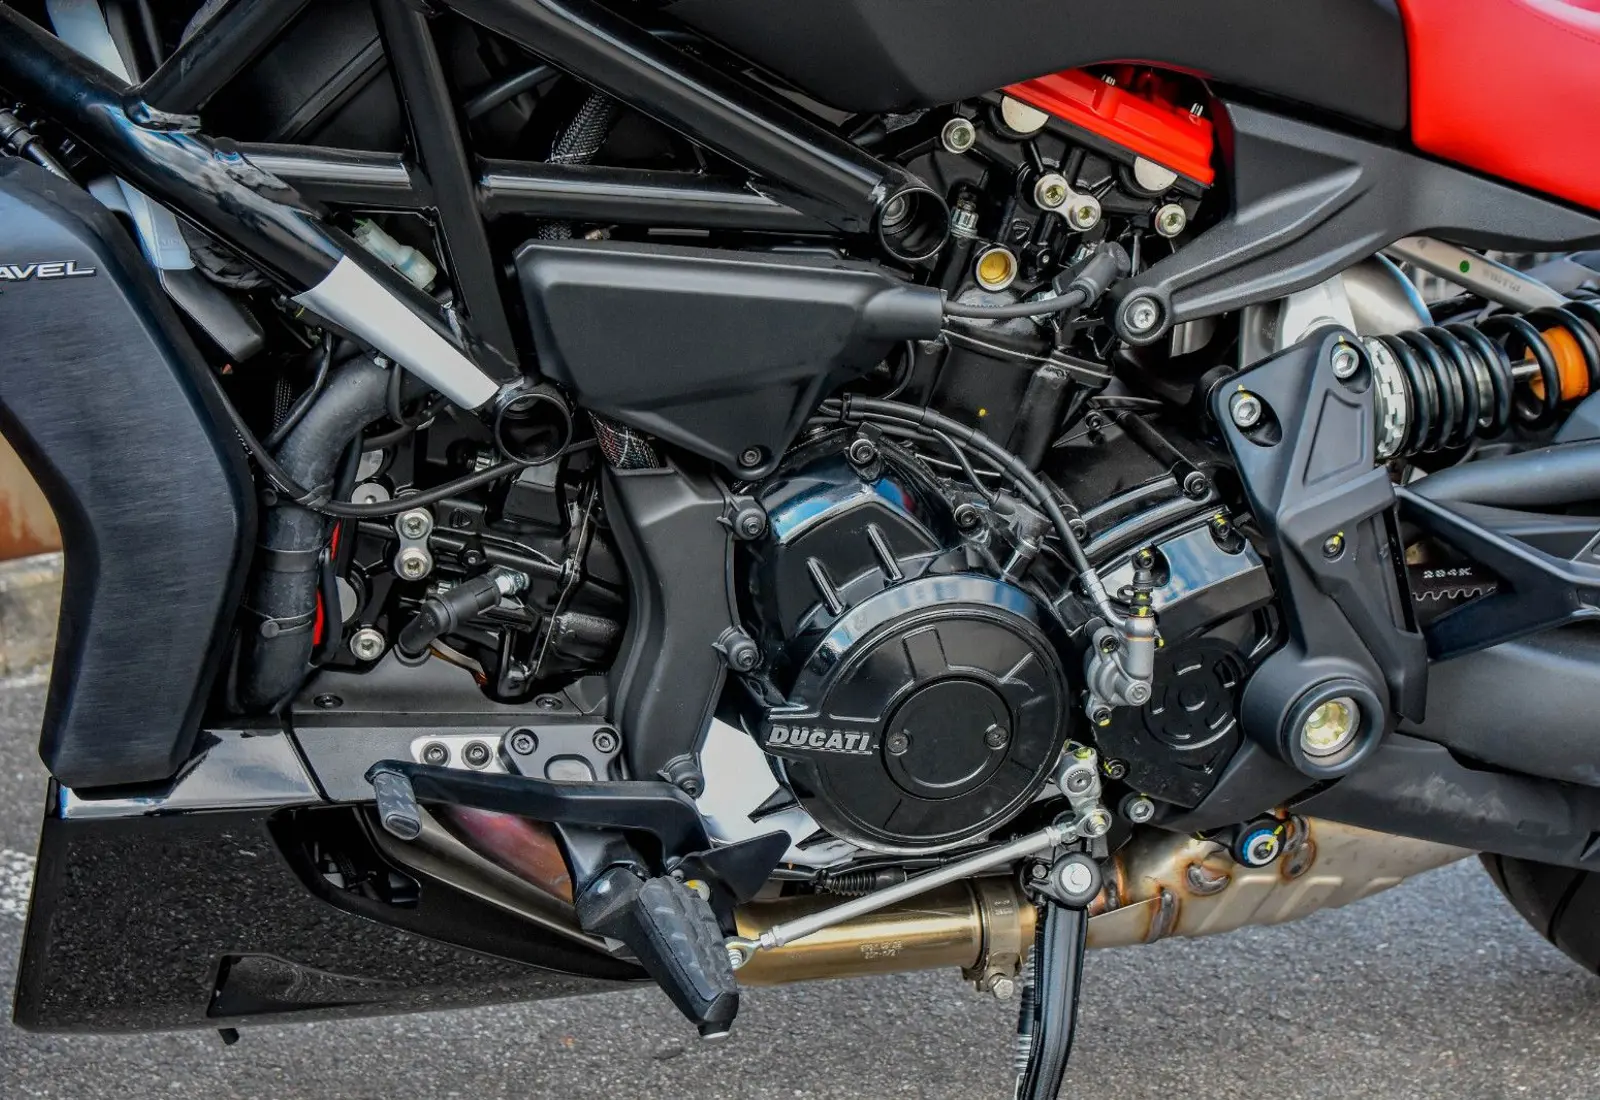 Ducati X-Diavel Nera * POLTRONA FRAU * 1 OF 500 * LIMITED ED - 42262